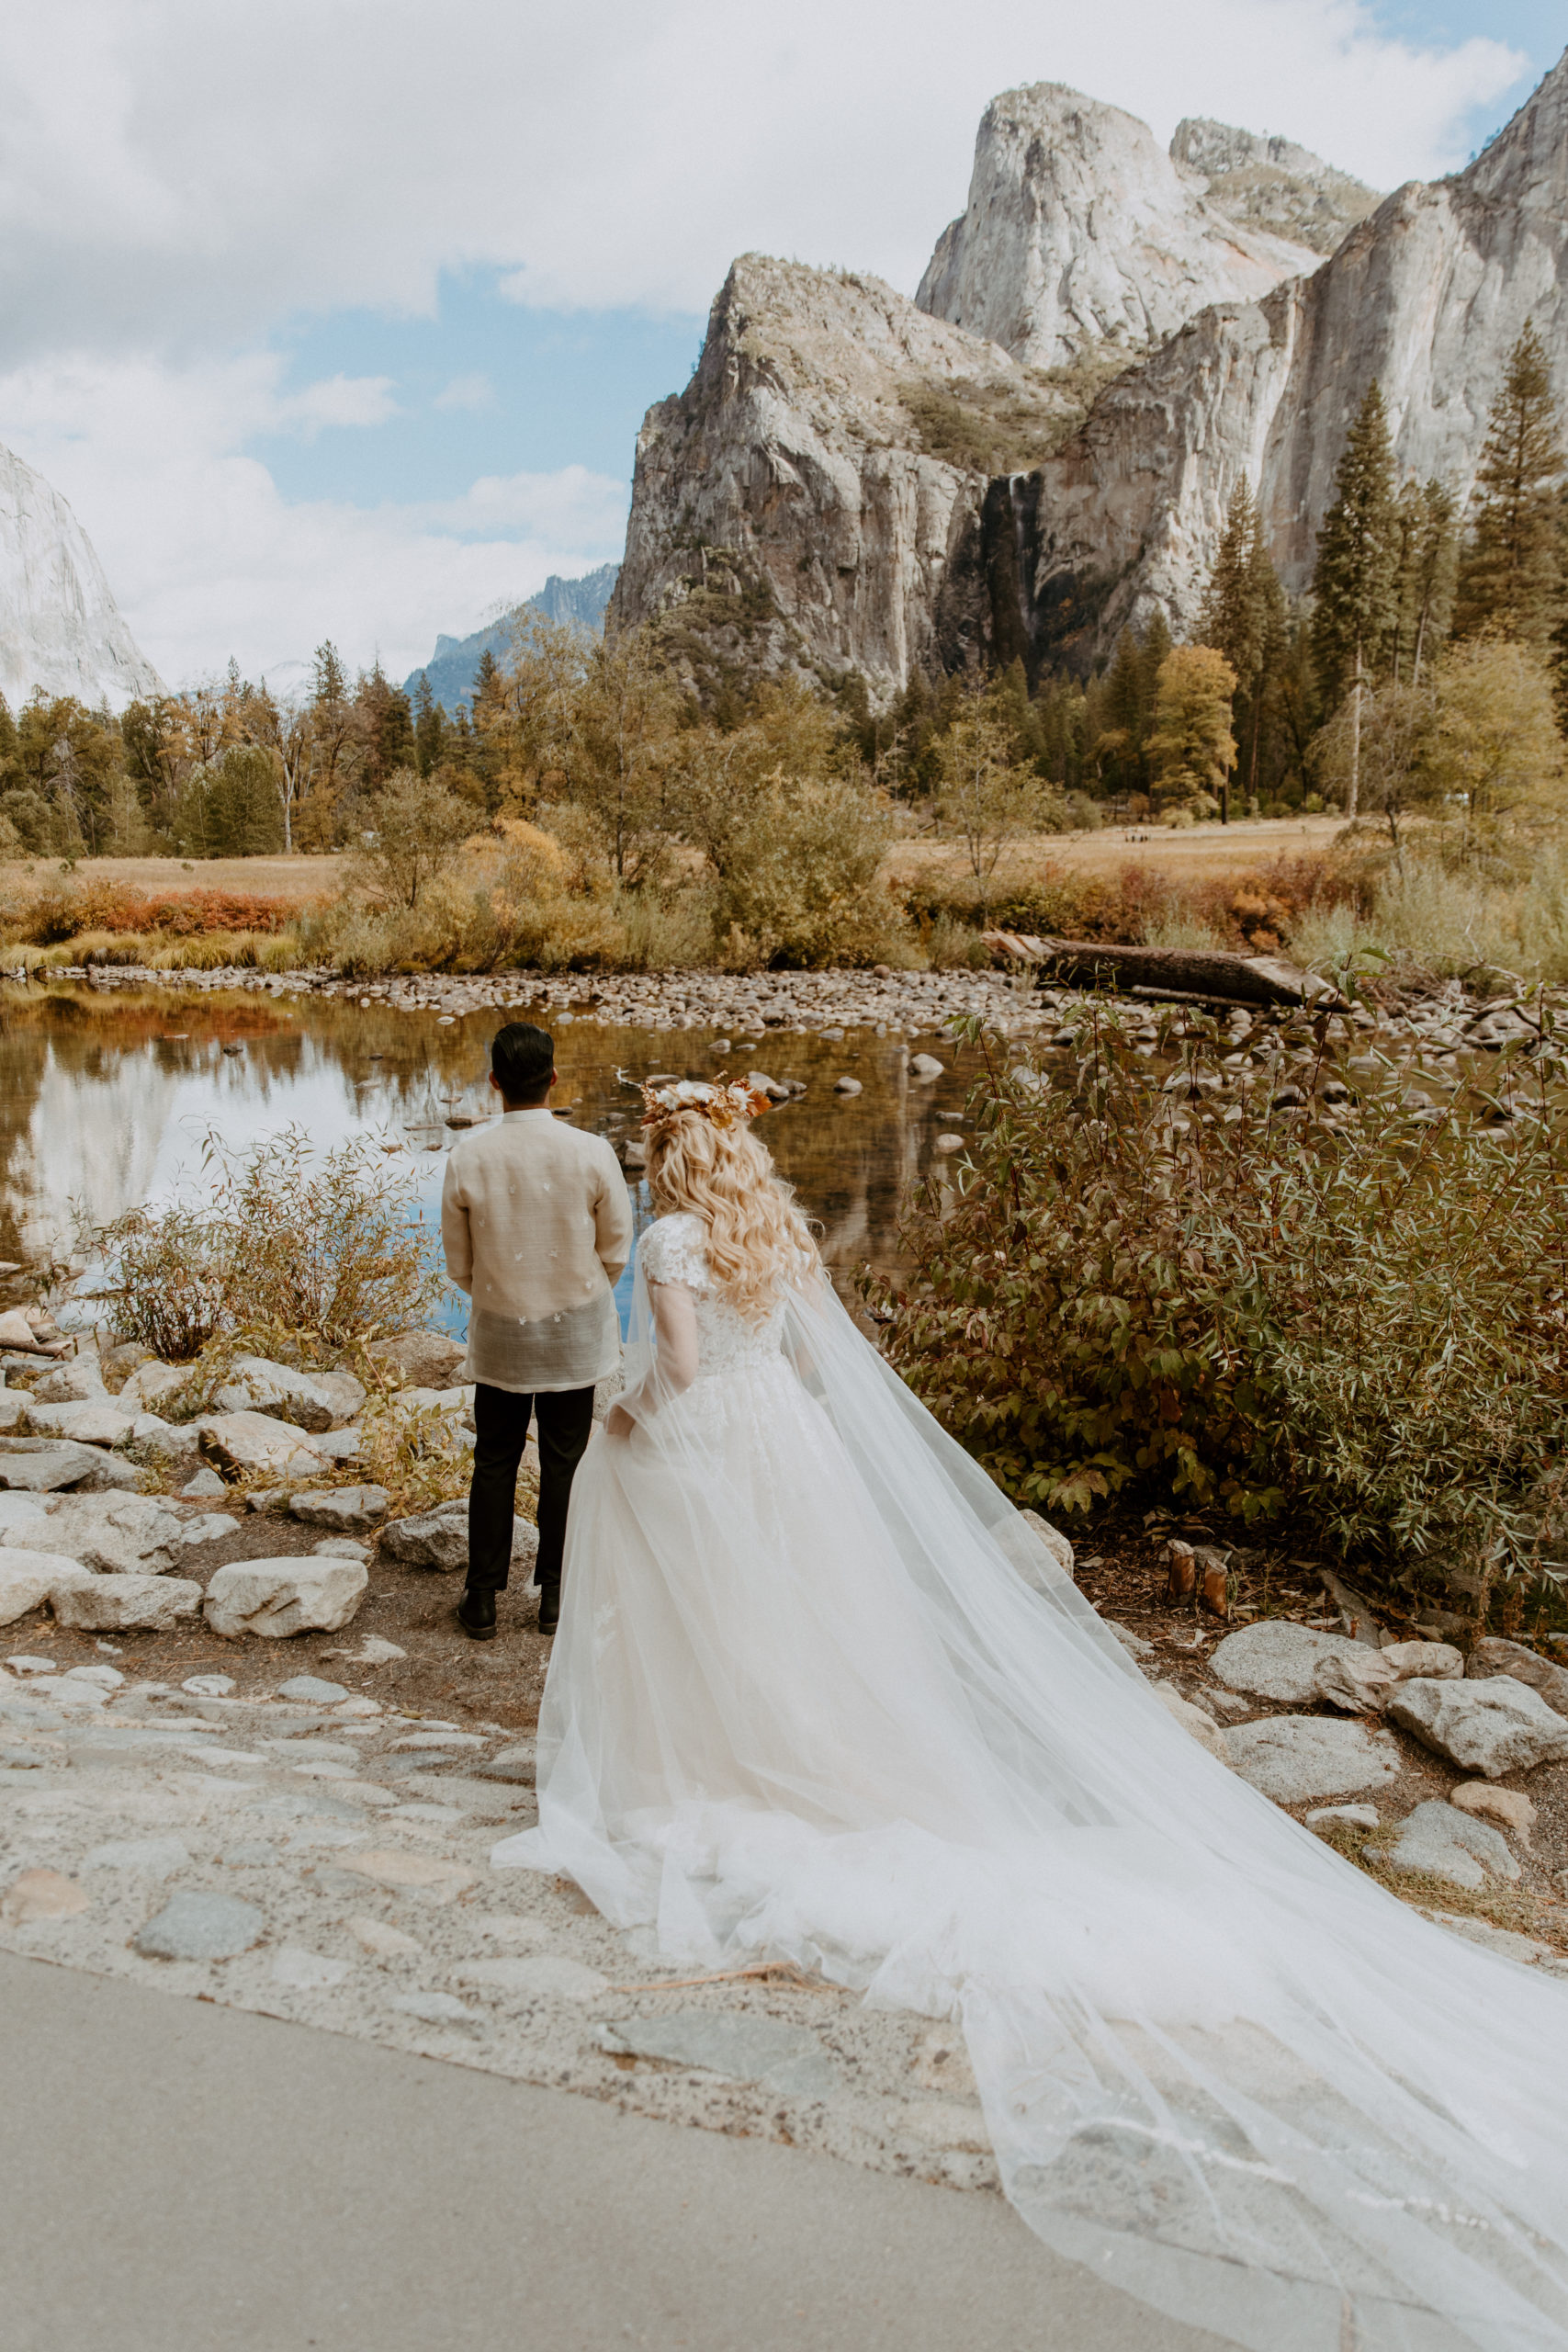 the bride walking towards the groom in Yosemite